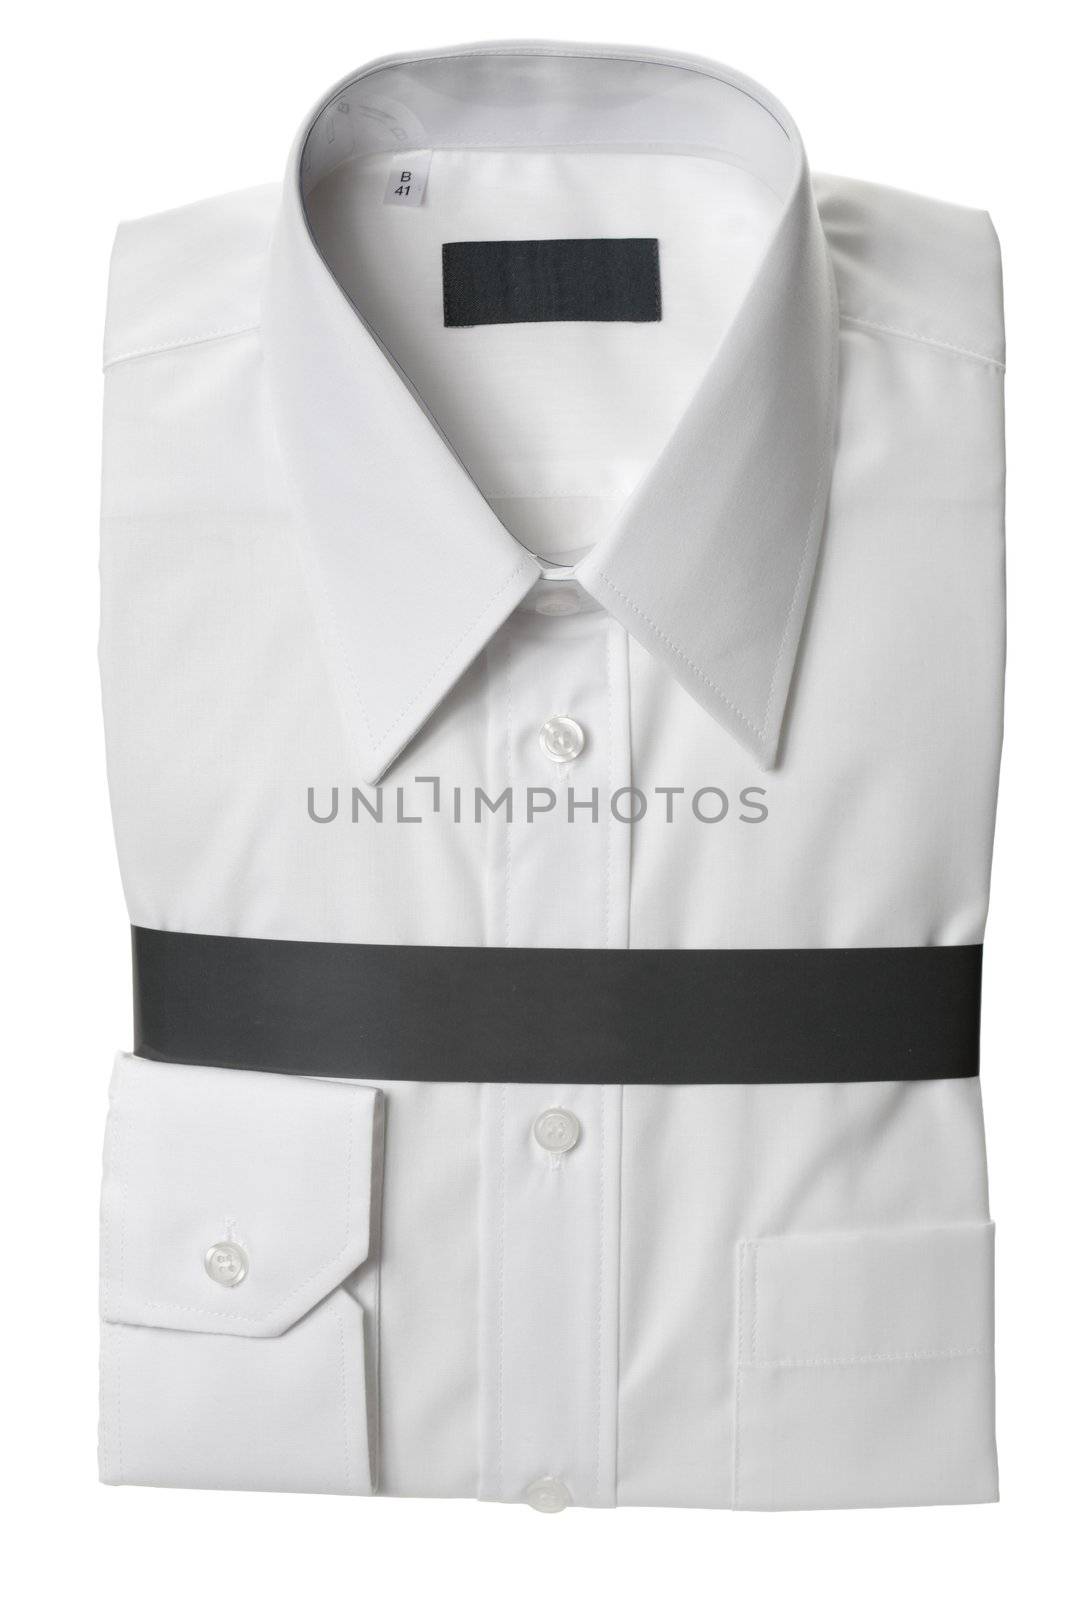 White dress shirt by Stocksnapper